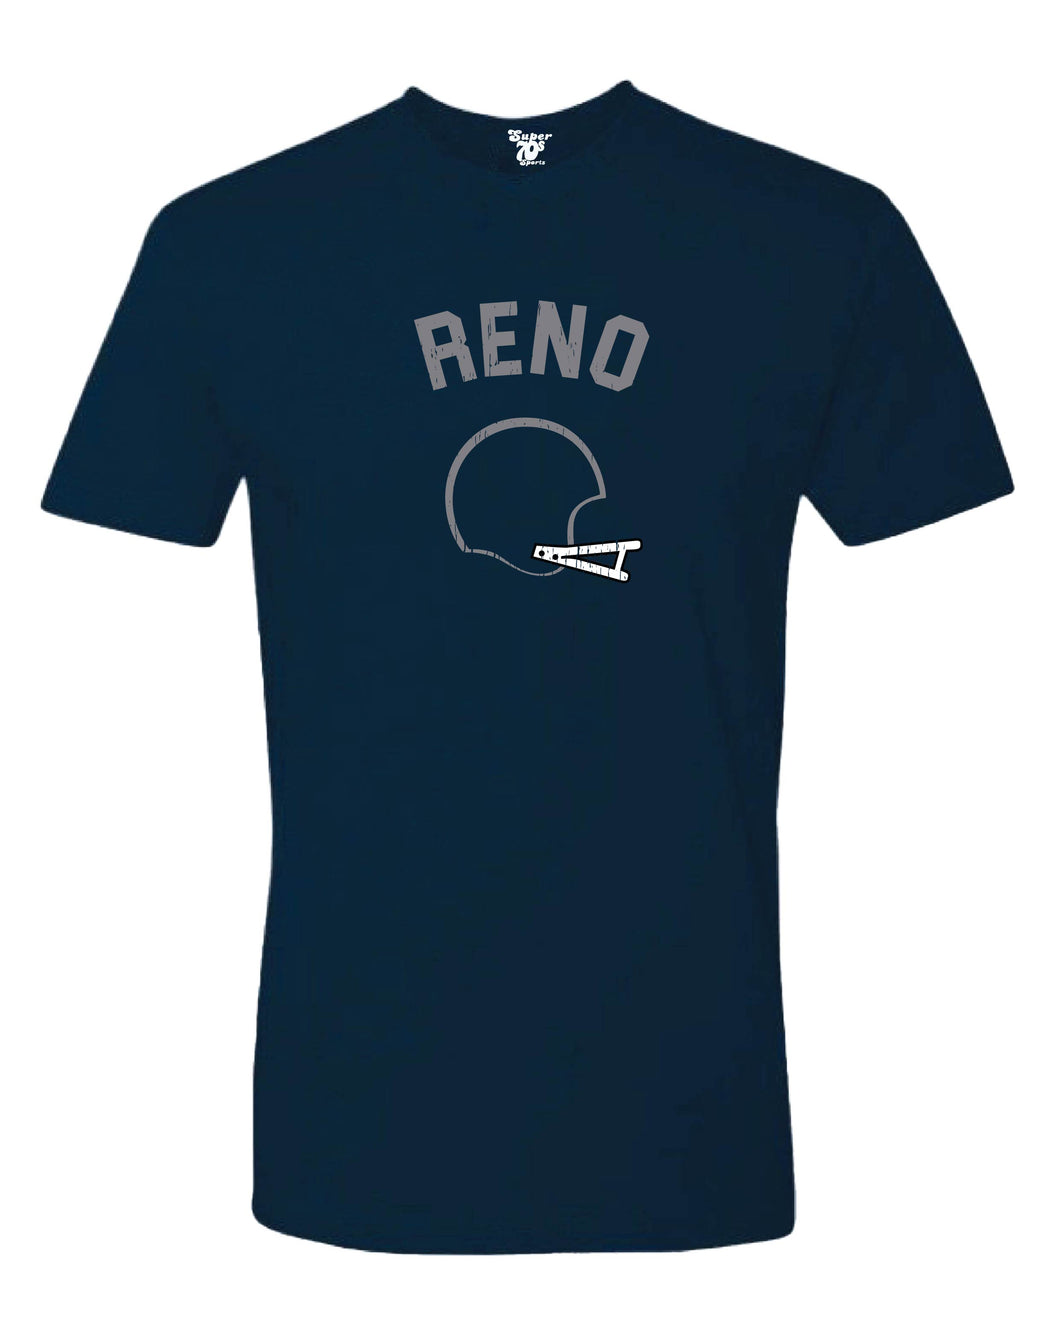 Reno Football Tee